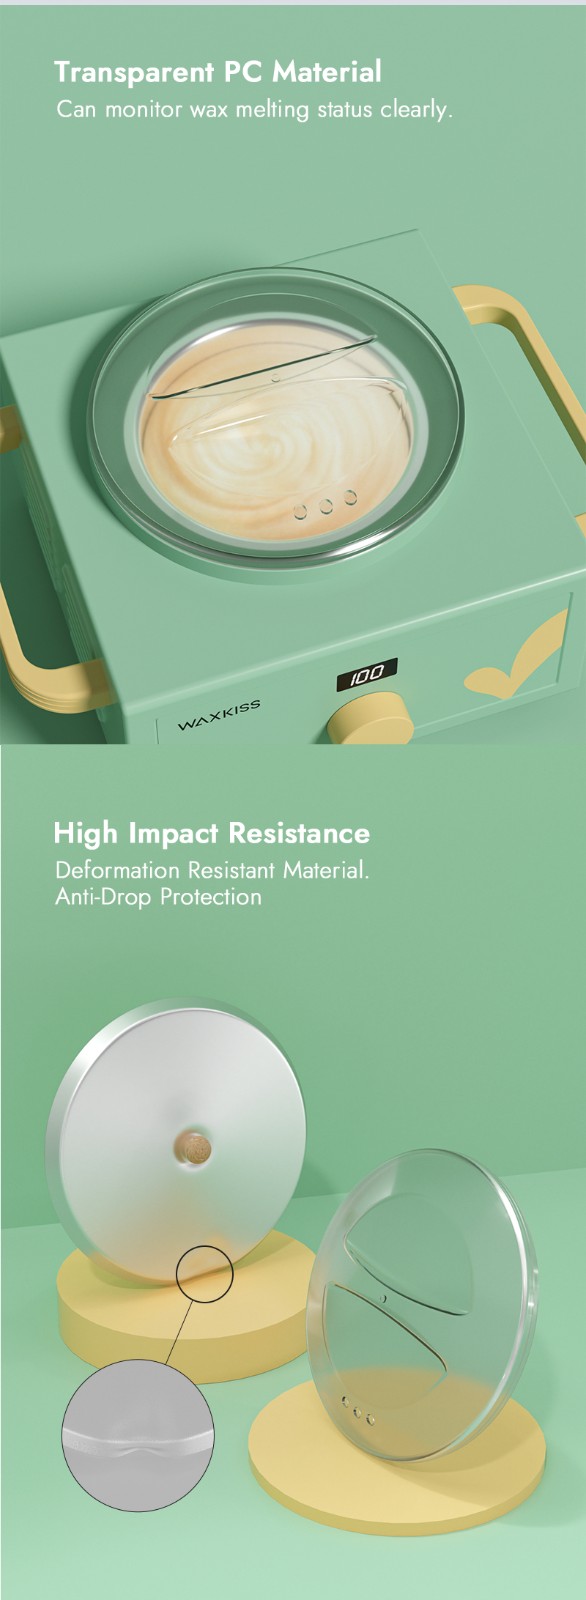 Wholesale 100W Digital Professional Wax Warmer Automatic Temperature Control Wax Heater Hair Removal Wax Machine